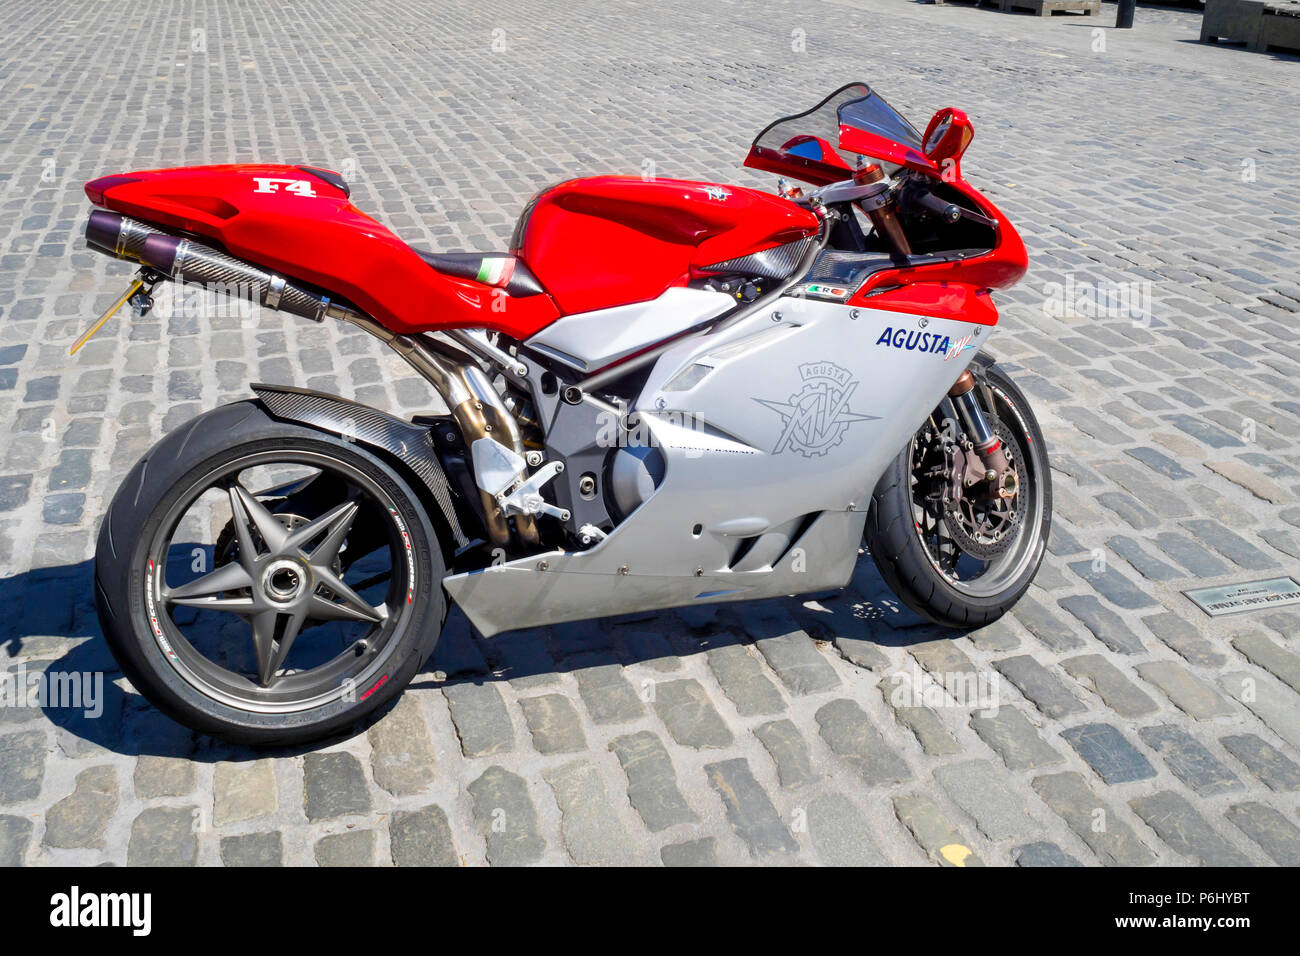 MV Agusta, the 'Ferrari of the motorcycle world', w